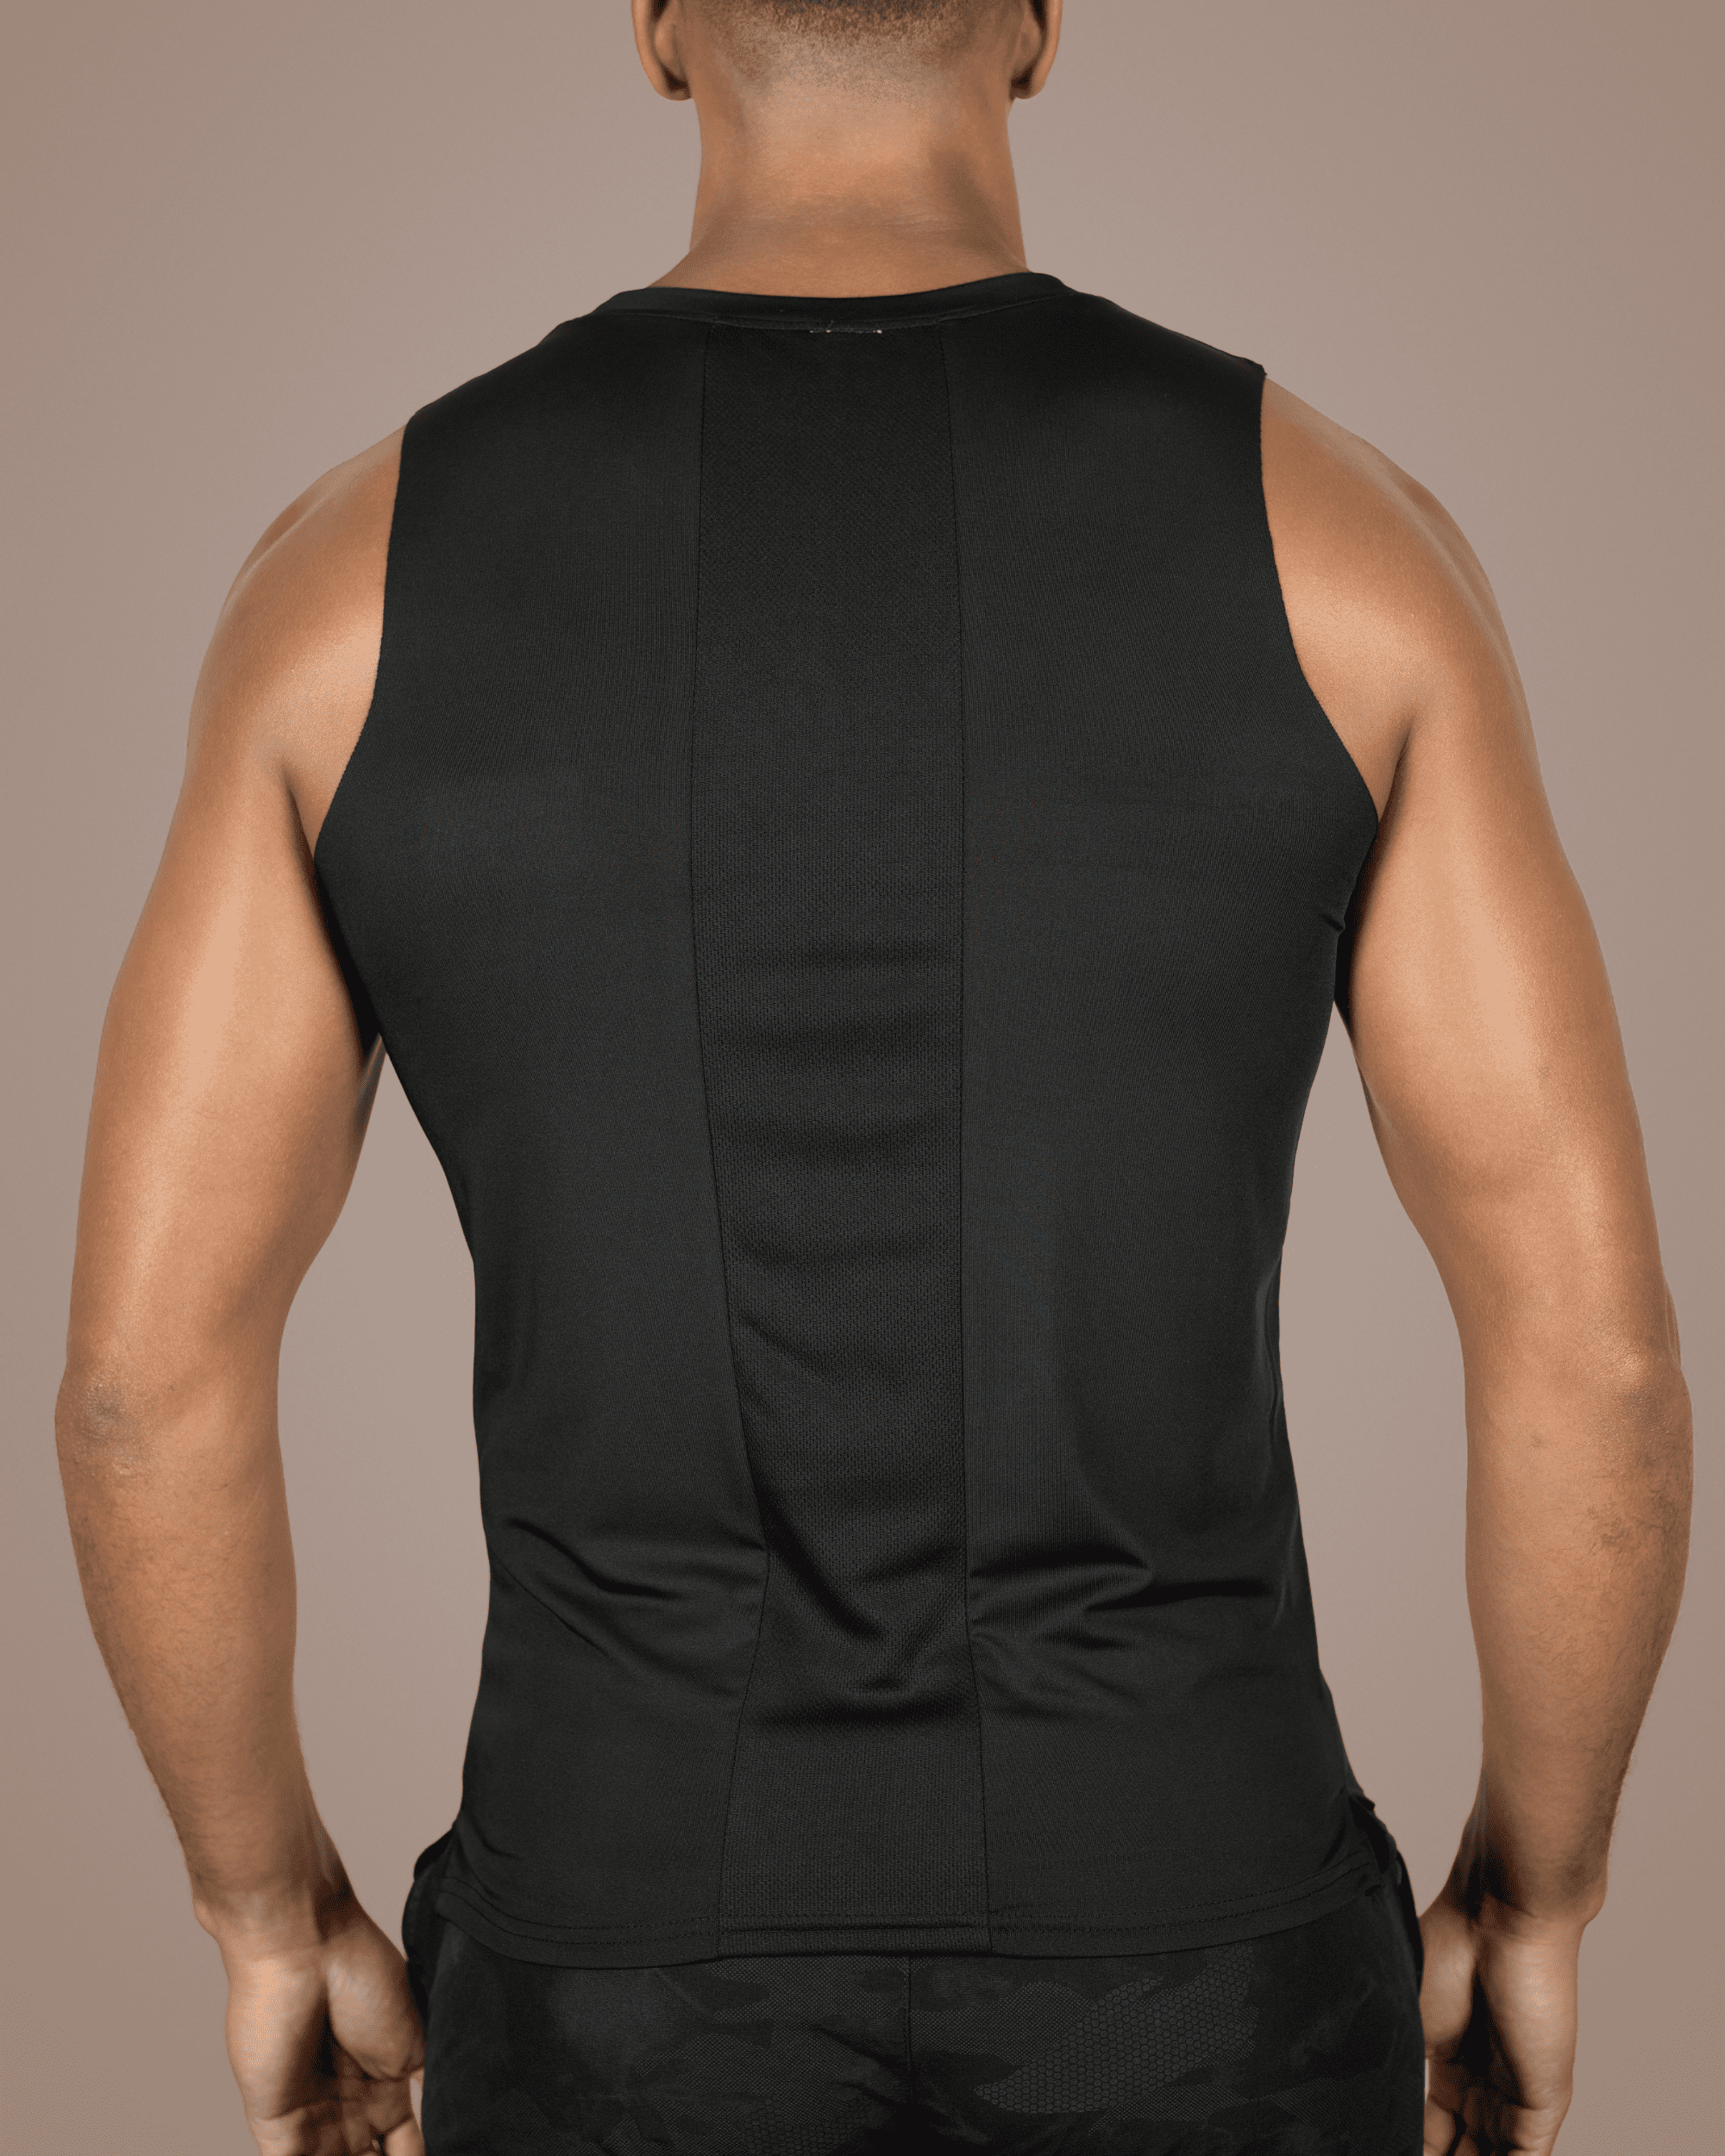 THUGFIT LiftRift Sleeveless Men's Slim Fit Tank Top - Black - THUGFIT